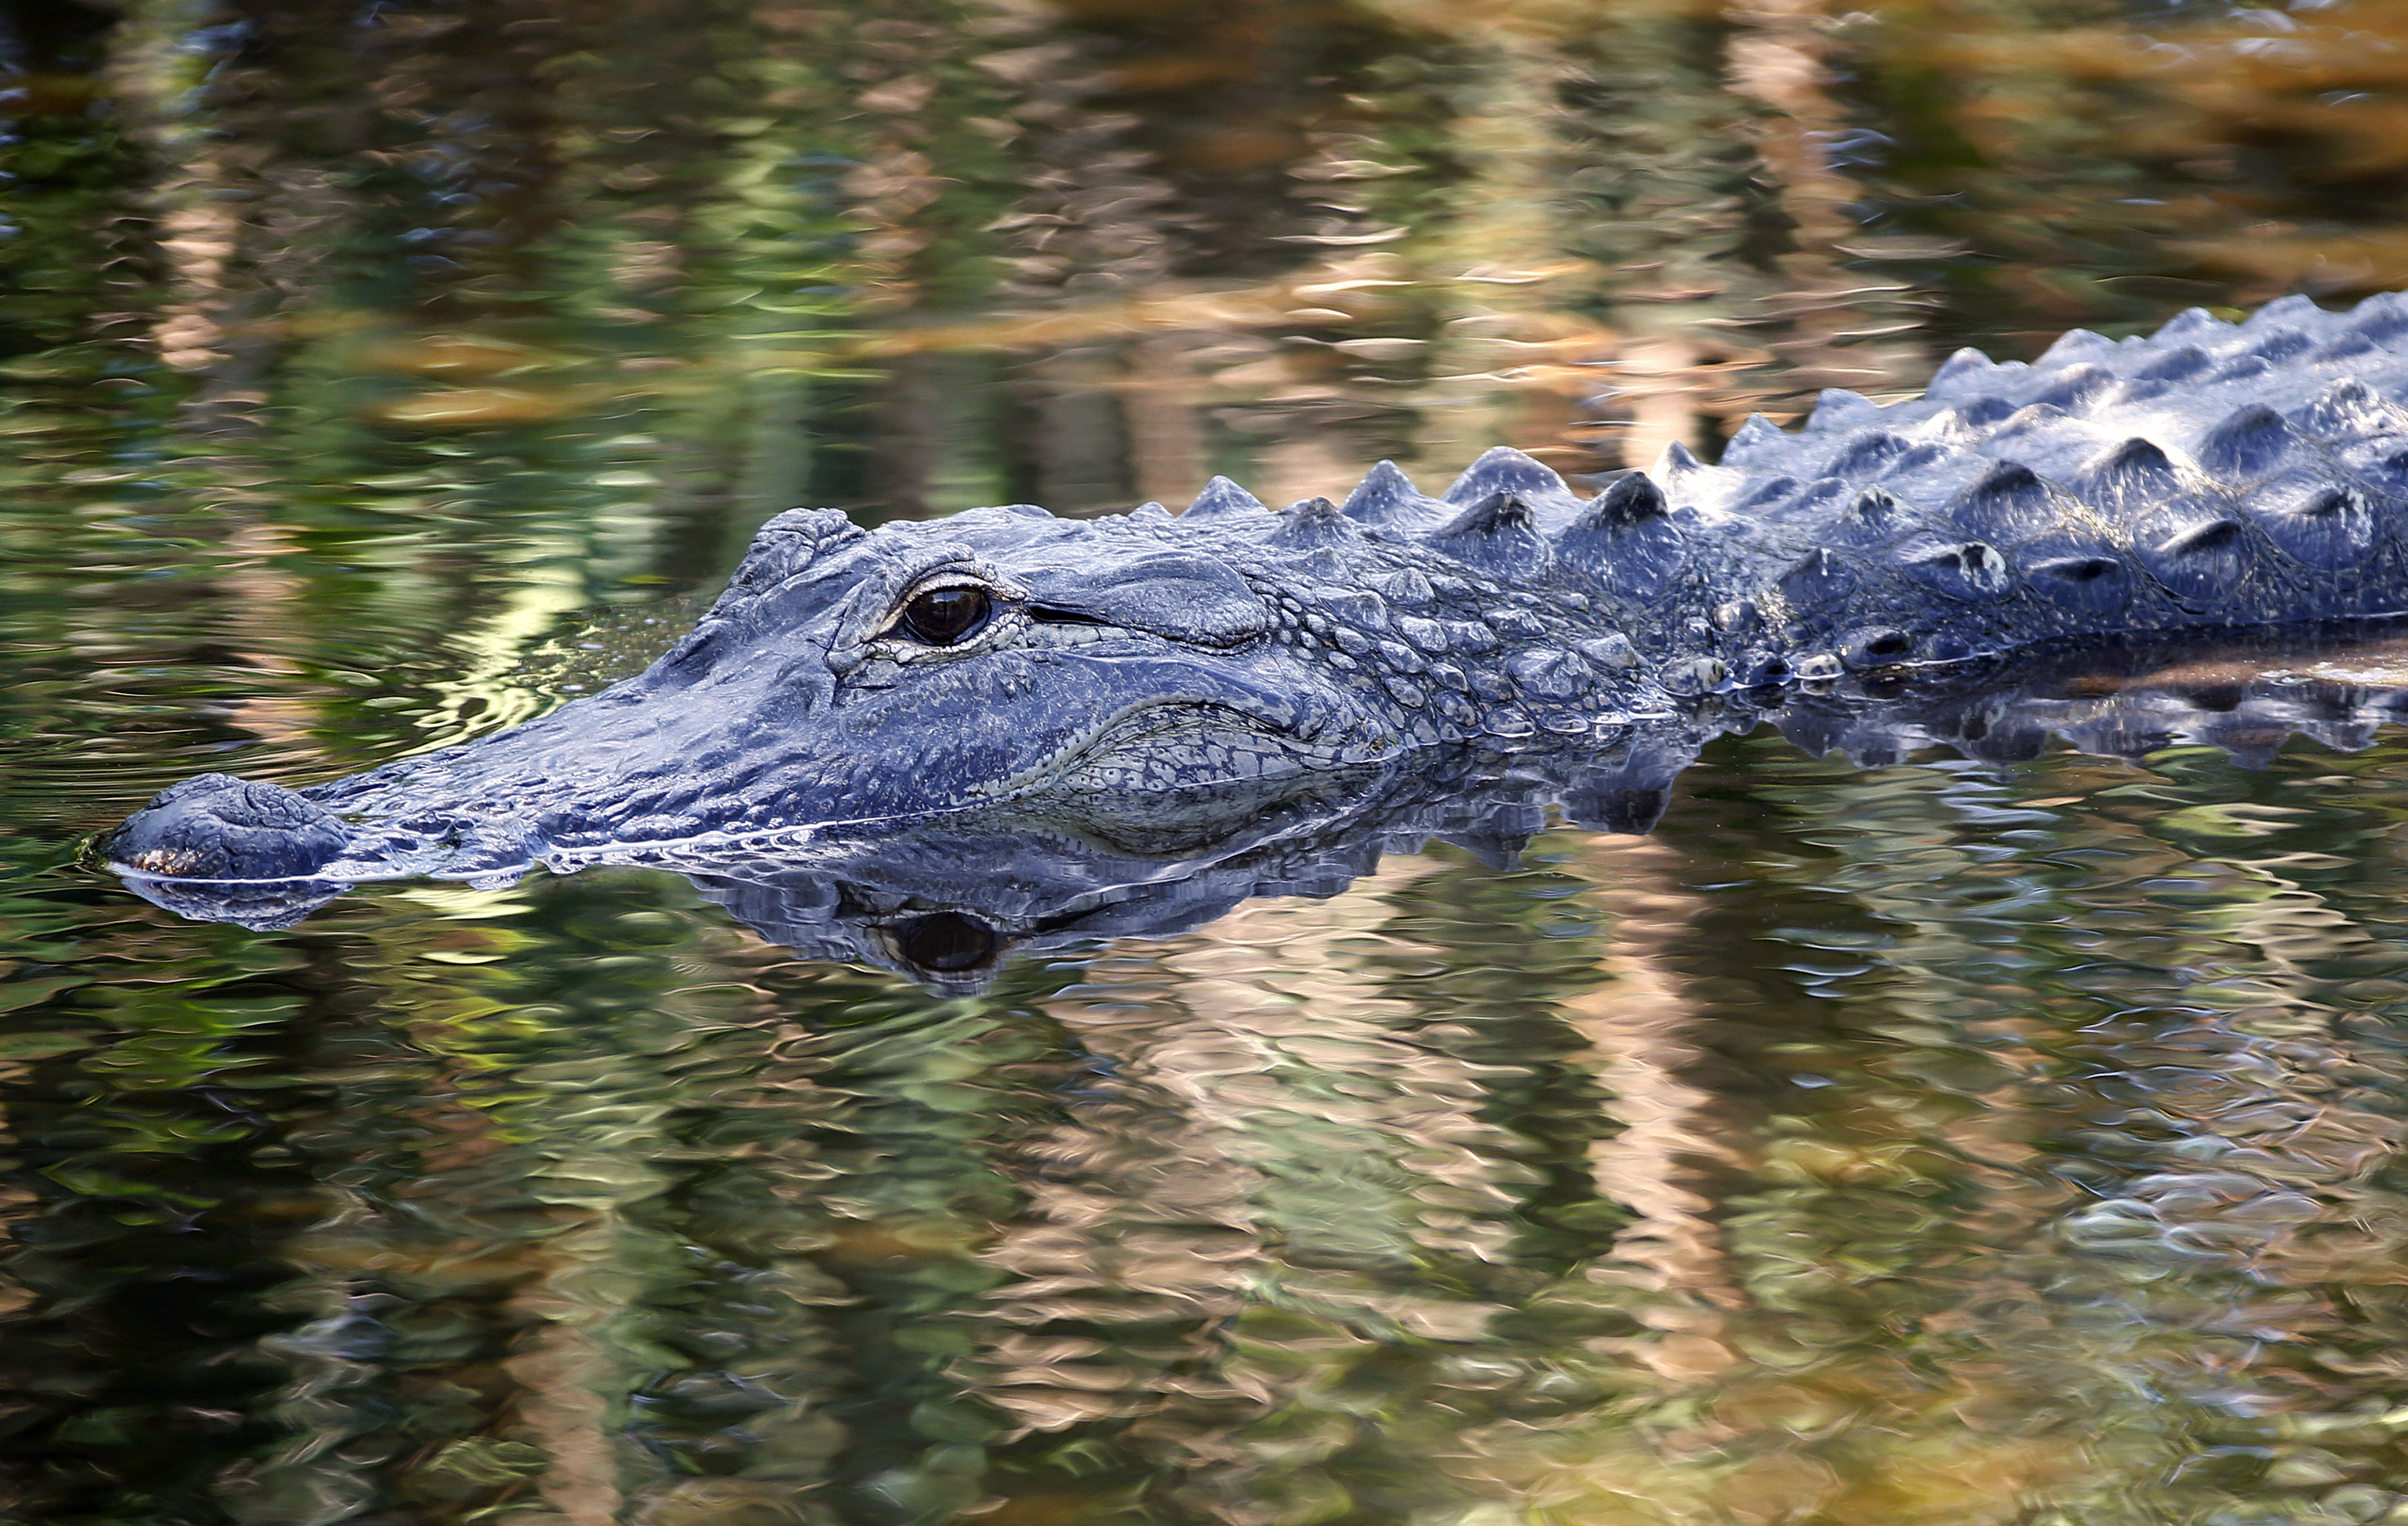 The 16 Fatal Alligator Attacks in Florida Since 1997 | Heavy.com